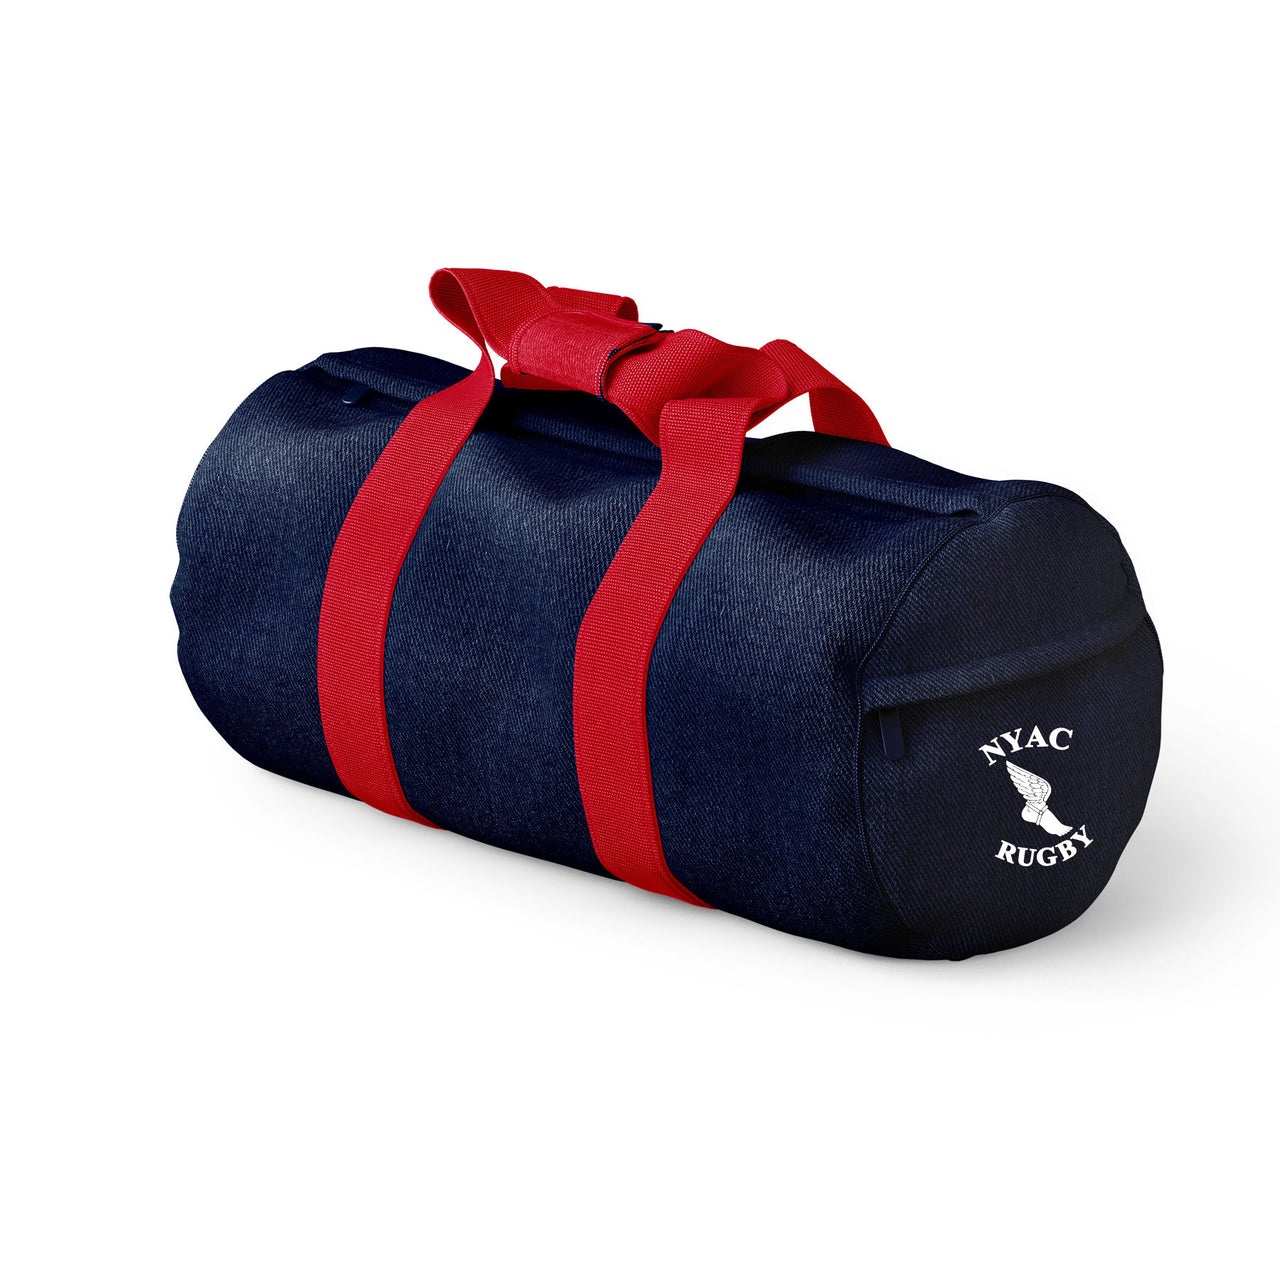 NYAC Rugby Duffel Bag